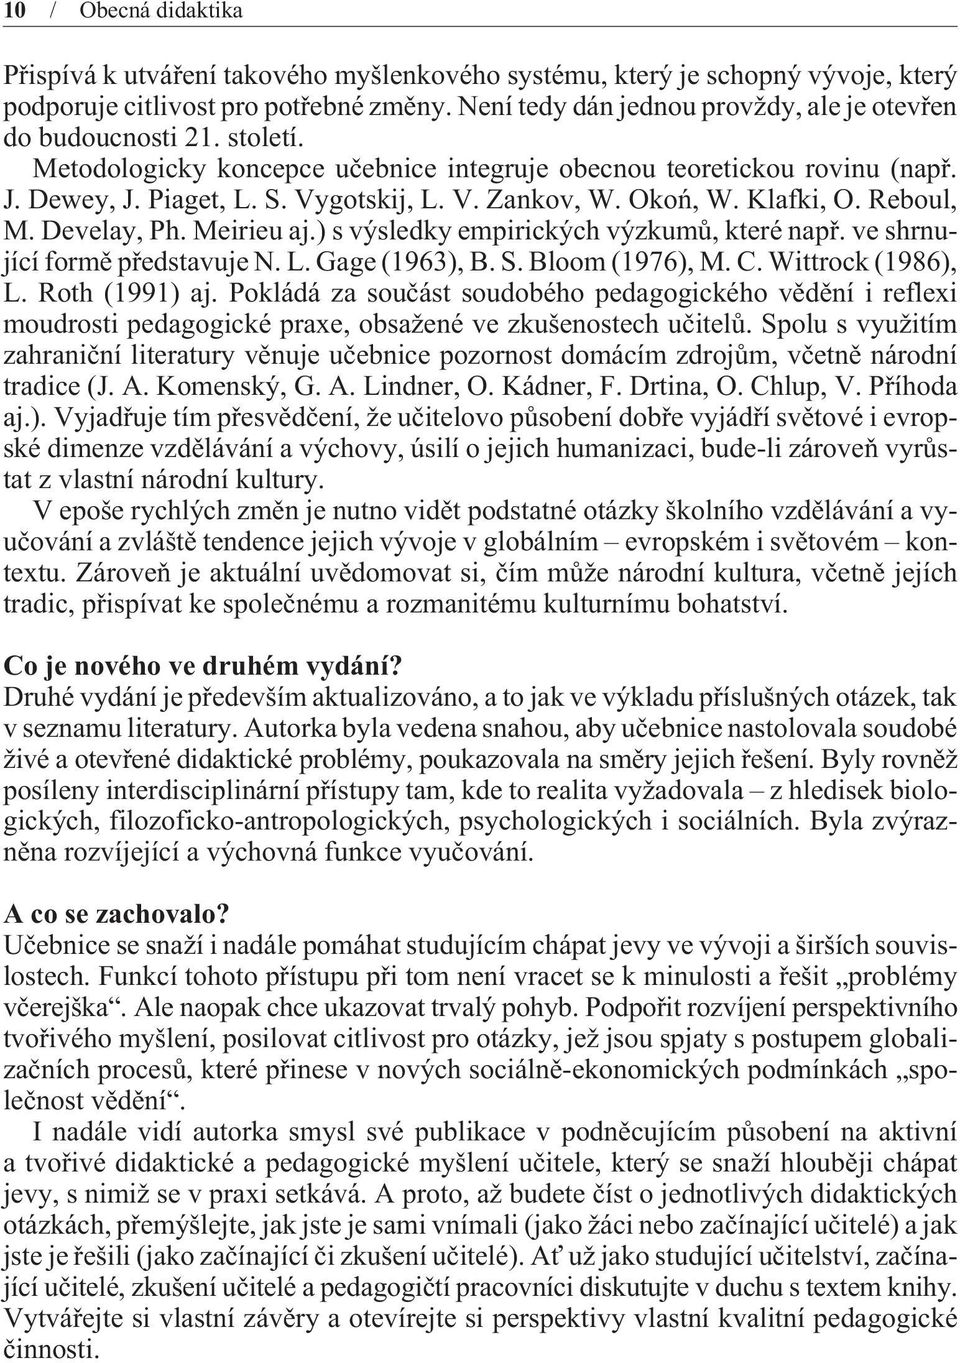 Okoñ, W. Klafki, O. Reboul, M. Develay, Ph. Meirieu aj.) s výsledky empirických výzkumù, které napø. ve shrnující formì pøedstavuje N. L. Gage (1963), B. S. Bloom (1976), M. C. Wittrock (1986), L.